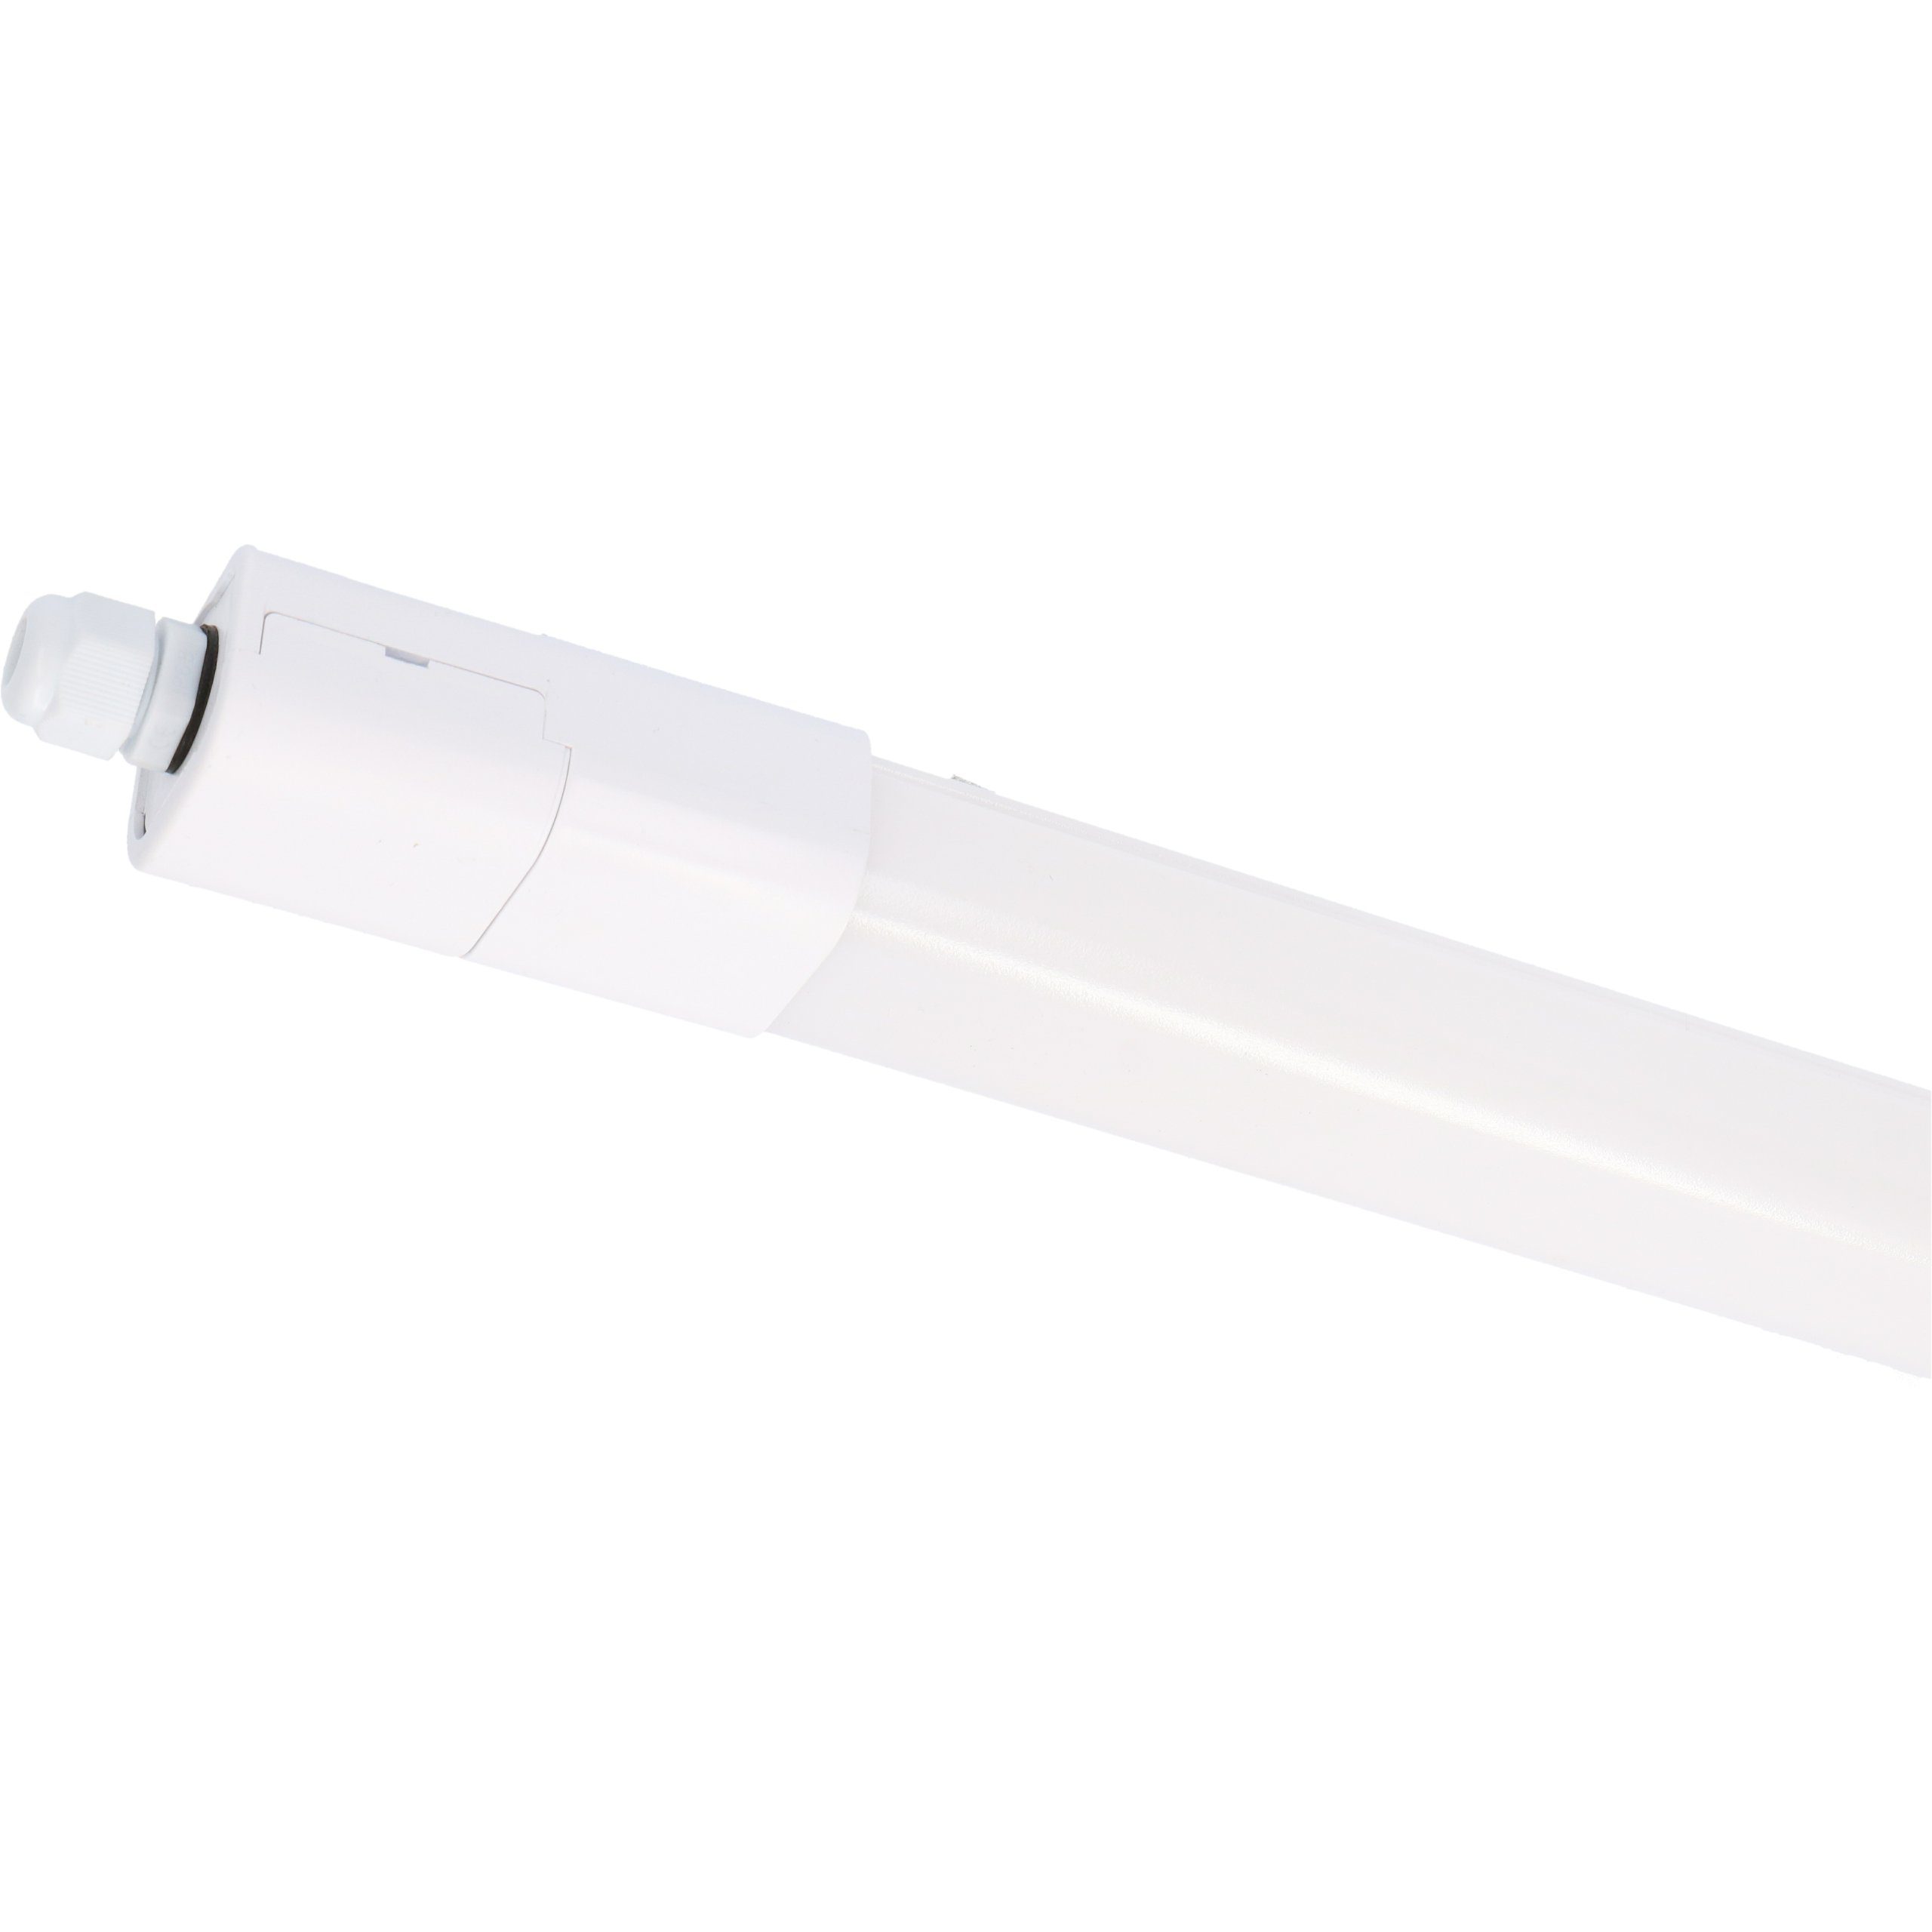 LED's light LED Deckenleuchte 2410255 LED-Feuchtraumleuchte, LED, Slim 150cm 24W neutralweiß IP65